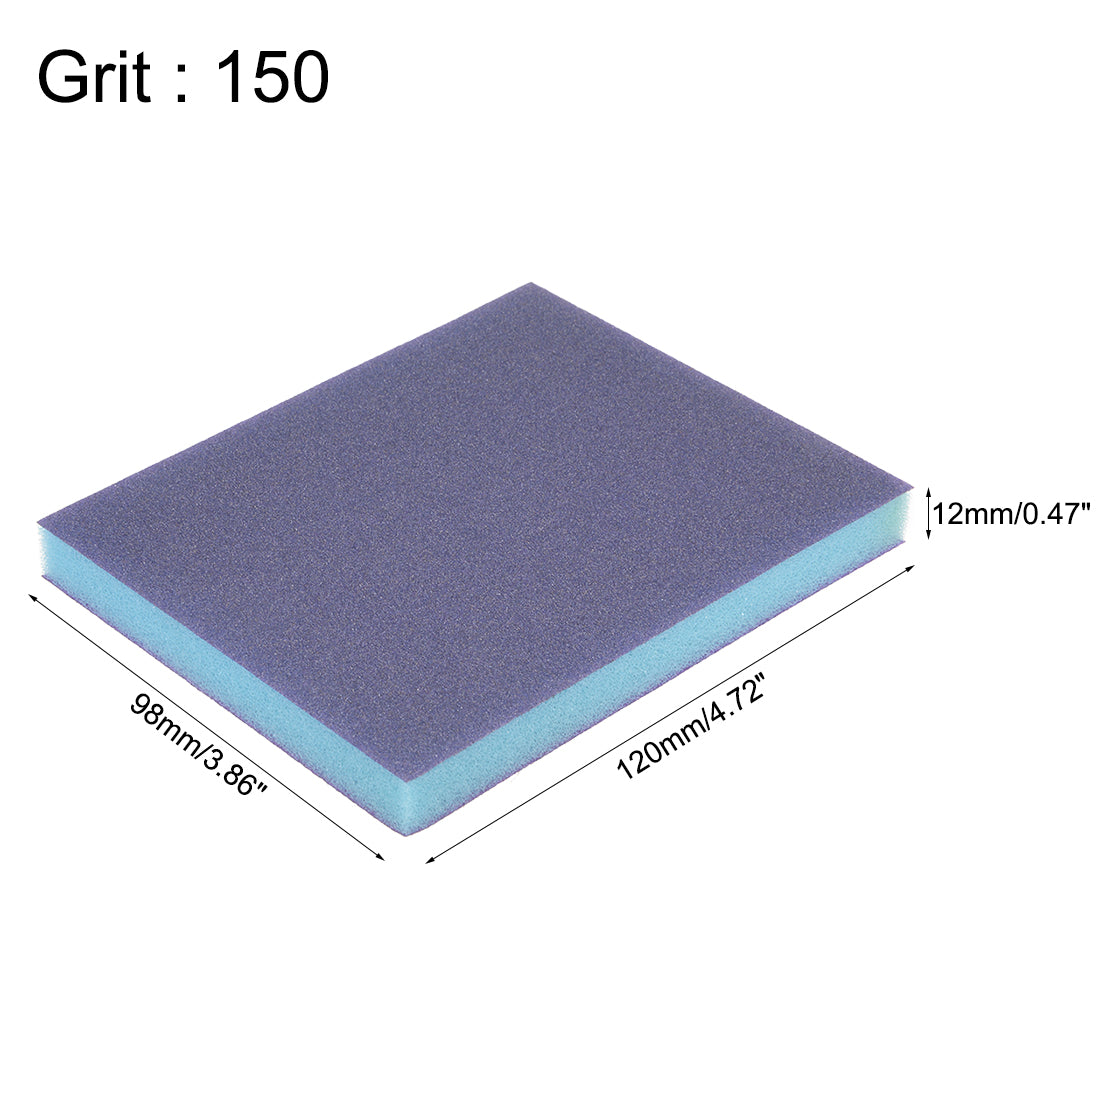 uxcell Uxcell Sanding Sponge, Medium Grit 150 Grit Sanding Block Pad, 4.72" x 3.86" x 0.47" Size 8pcs